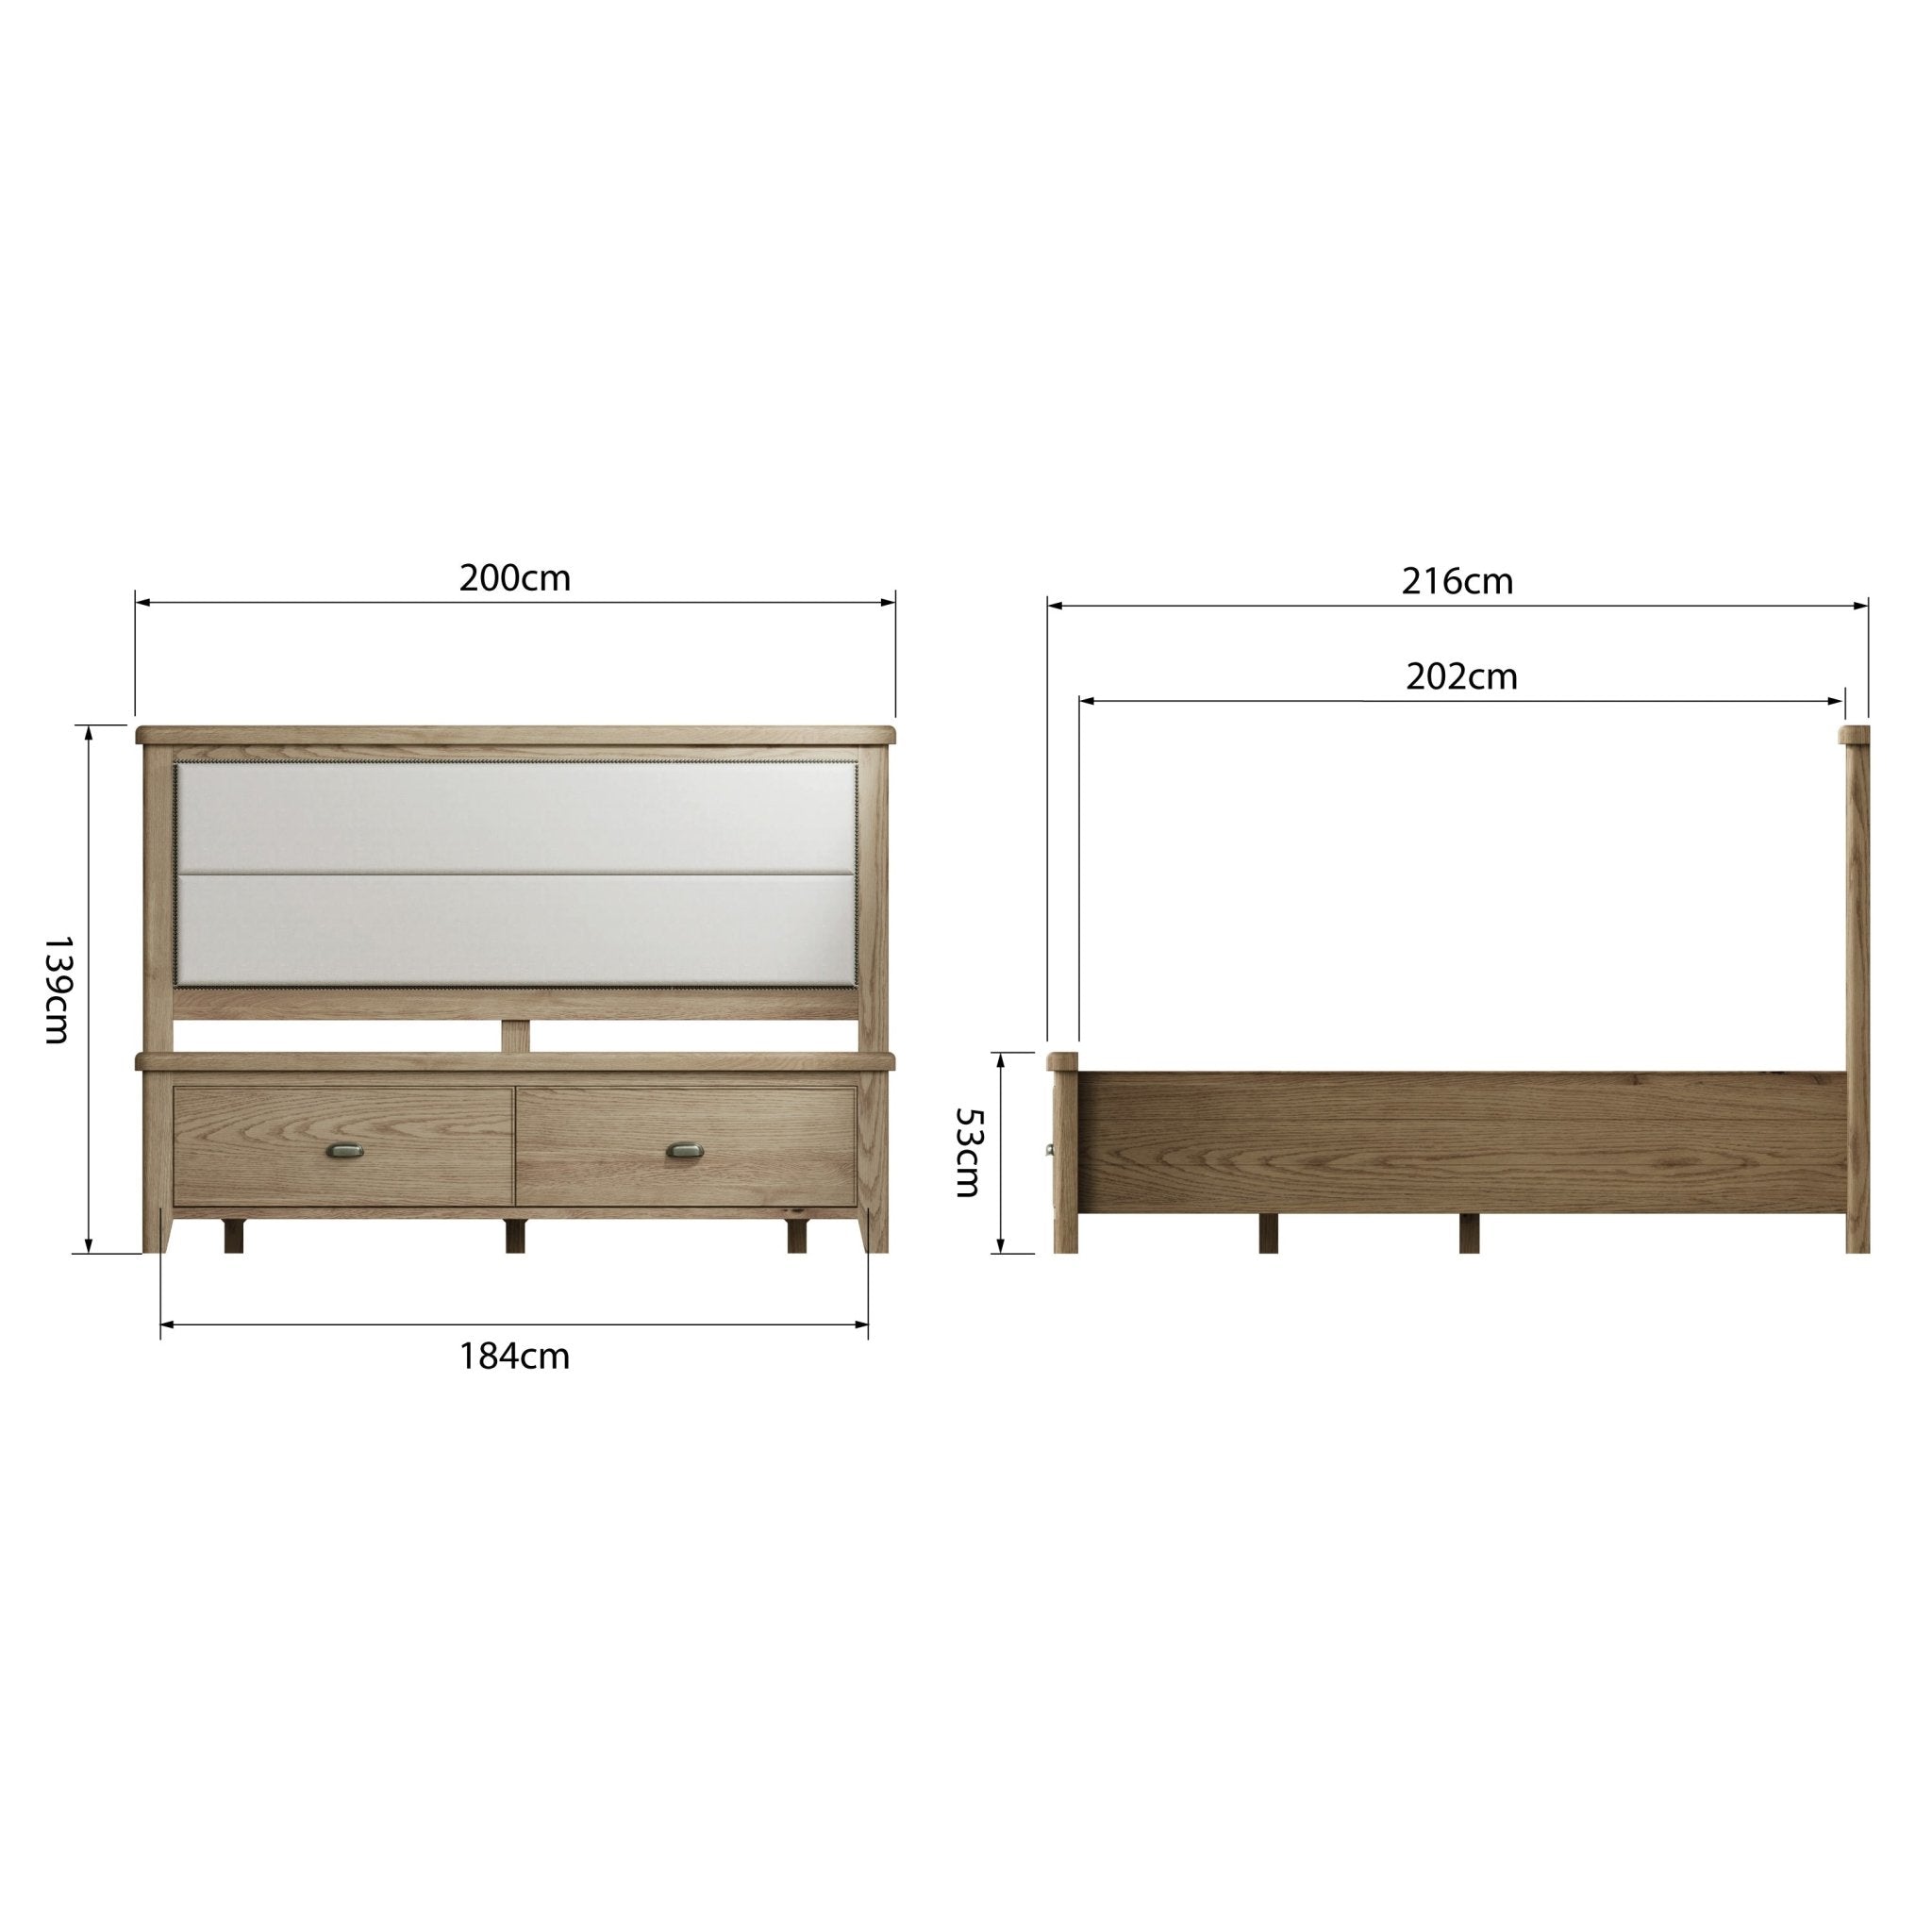 Rusper Oak 6'0 Super King Size Bed Frame - Fabric Headboard & Drawers - Duck Barn Interiors